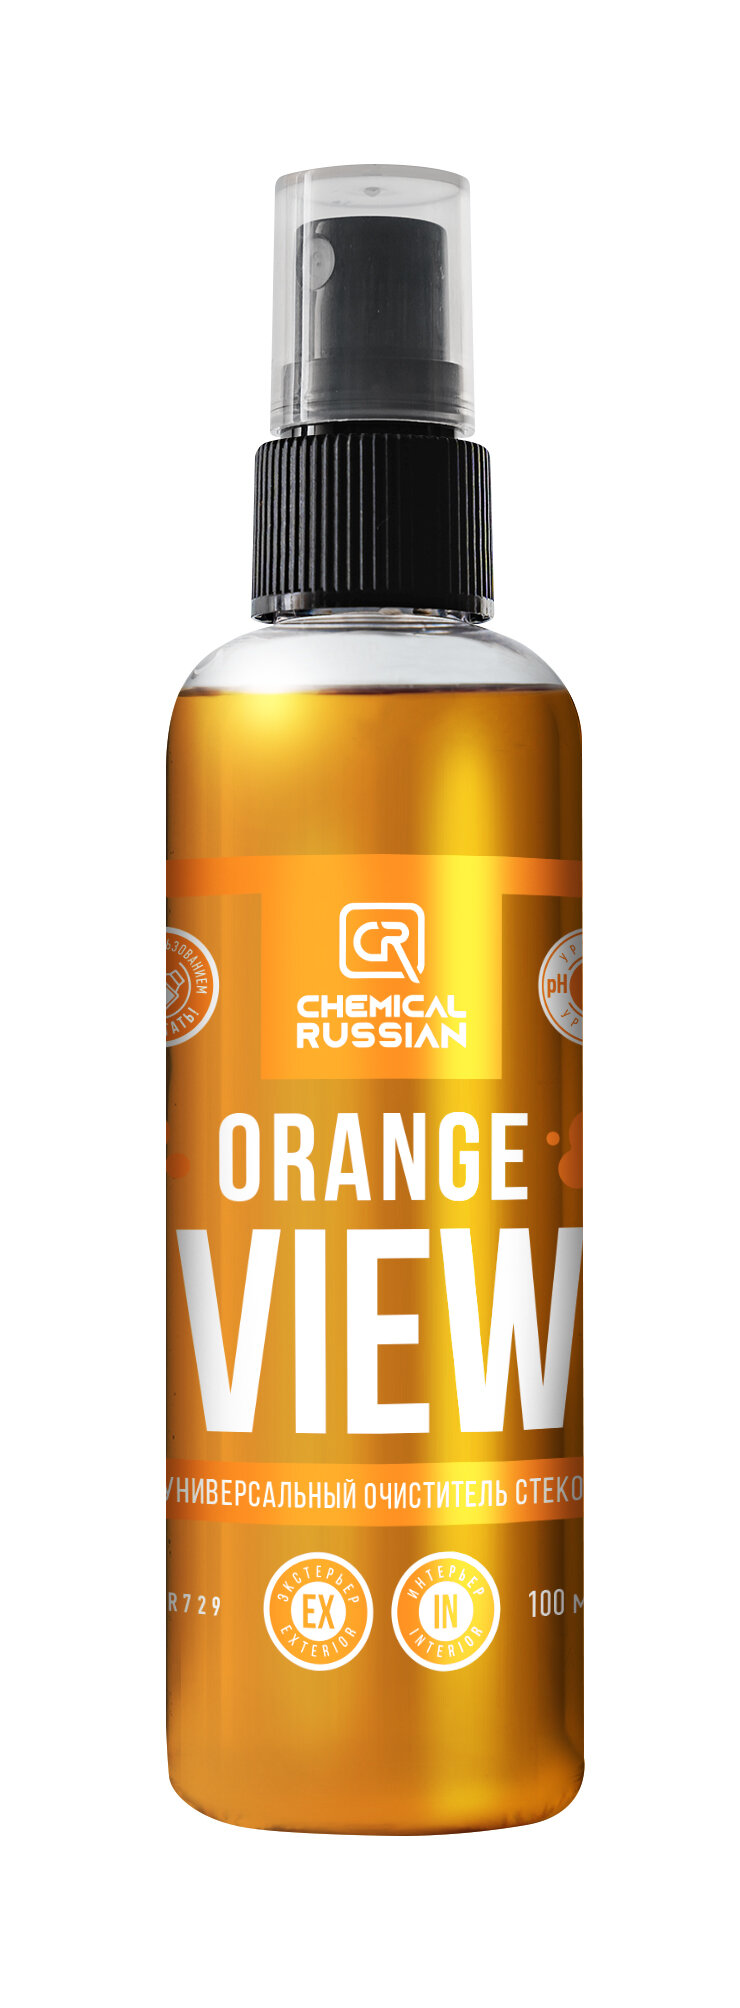 Очиститель стекол и зеркал - View Orange, 100 мл, Chemical Russian